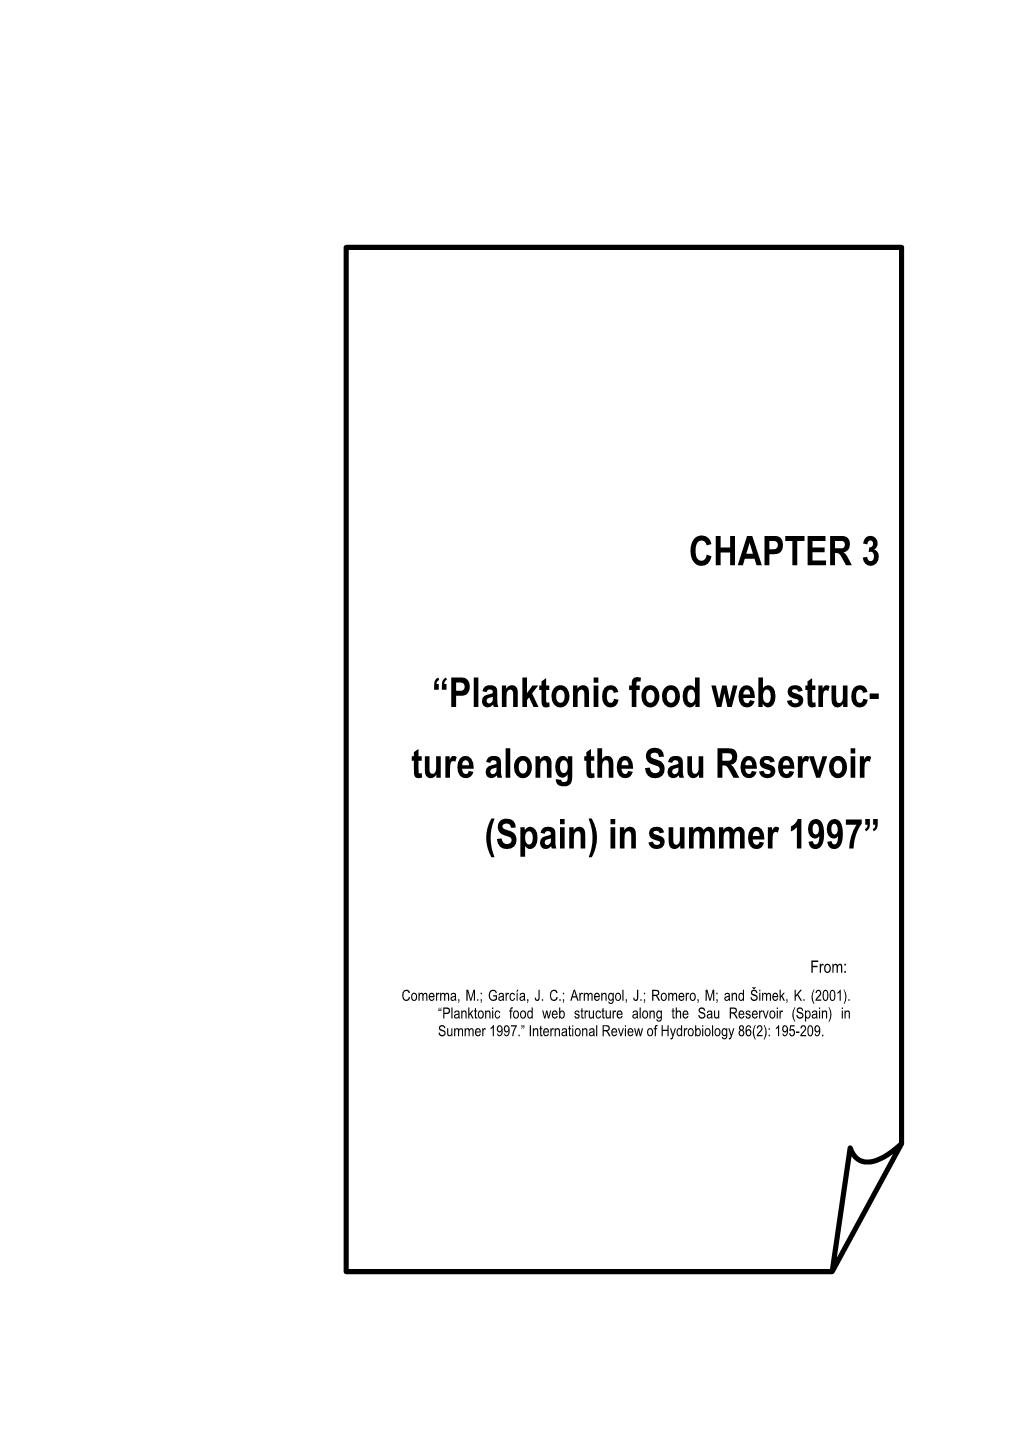 Planktonic Food Web Struc- Ture Along the Sau Reservoir (Spain) in Summer 1997”